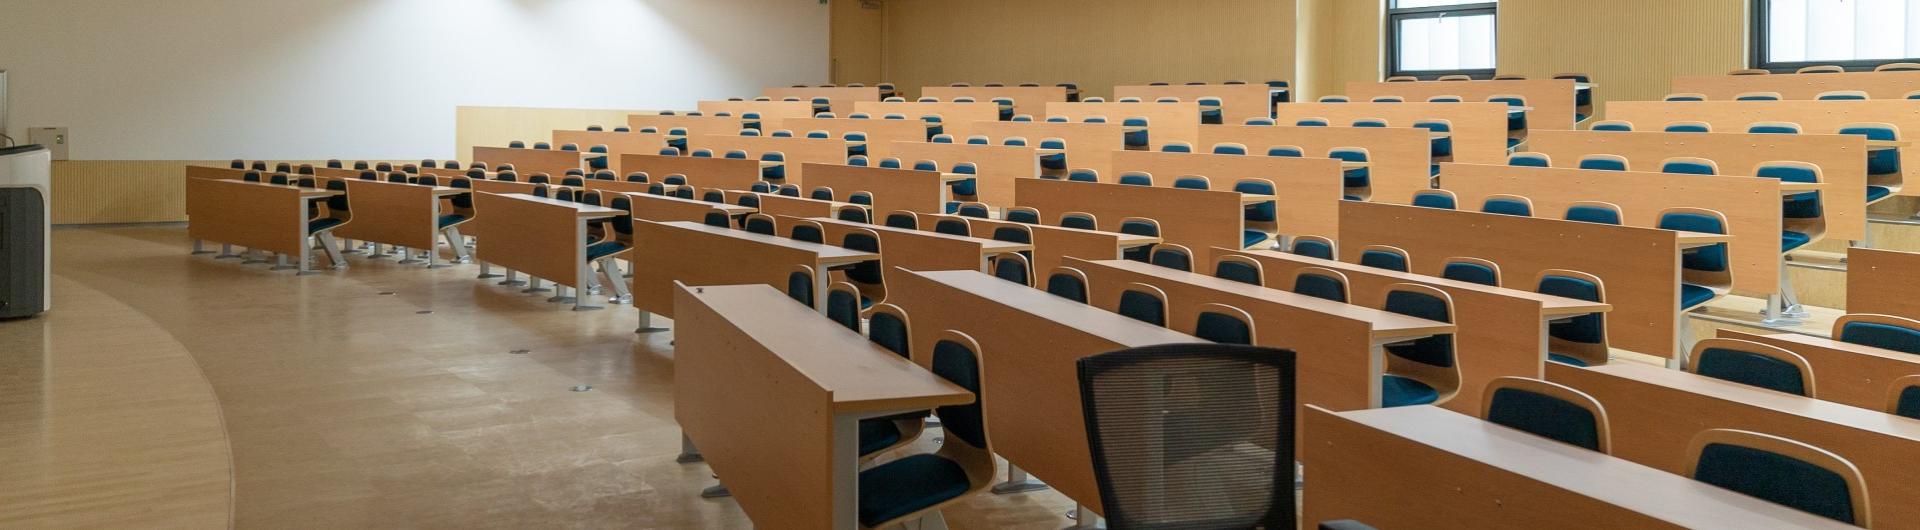 View of empty classroom